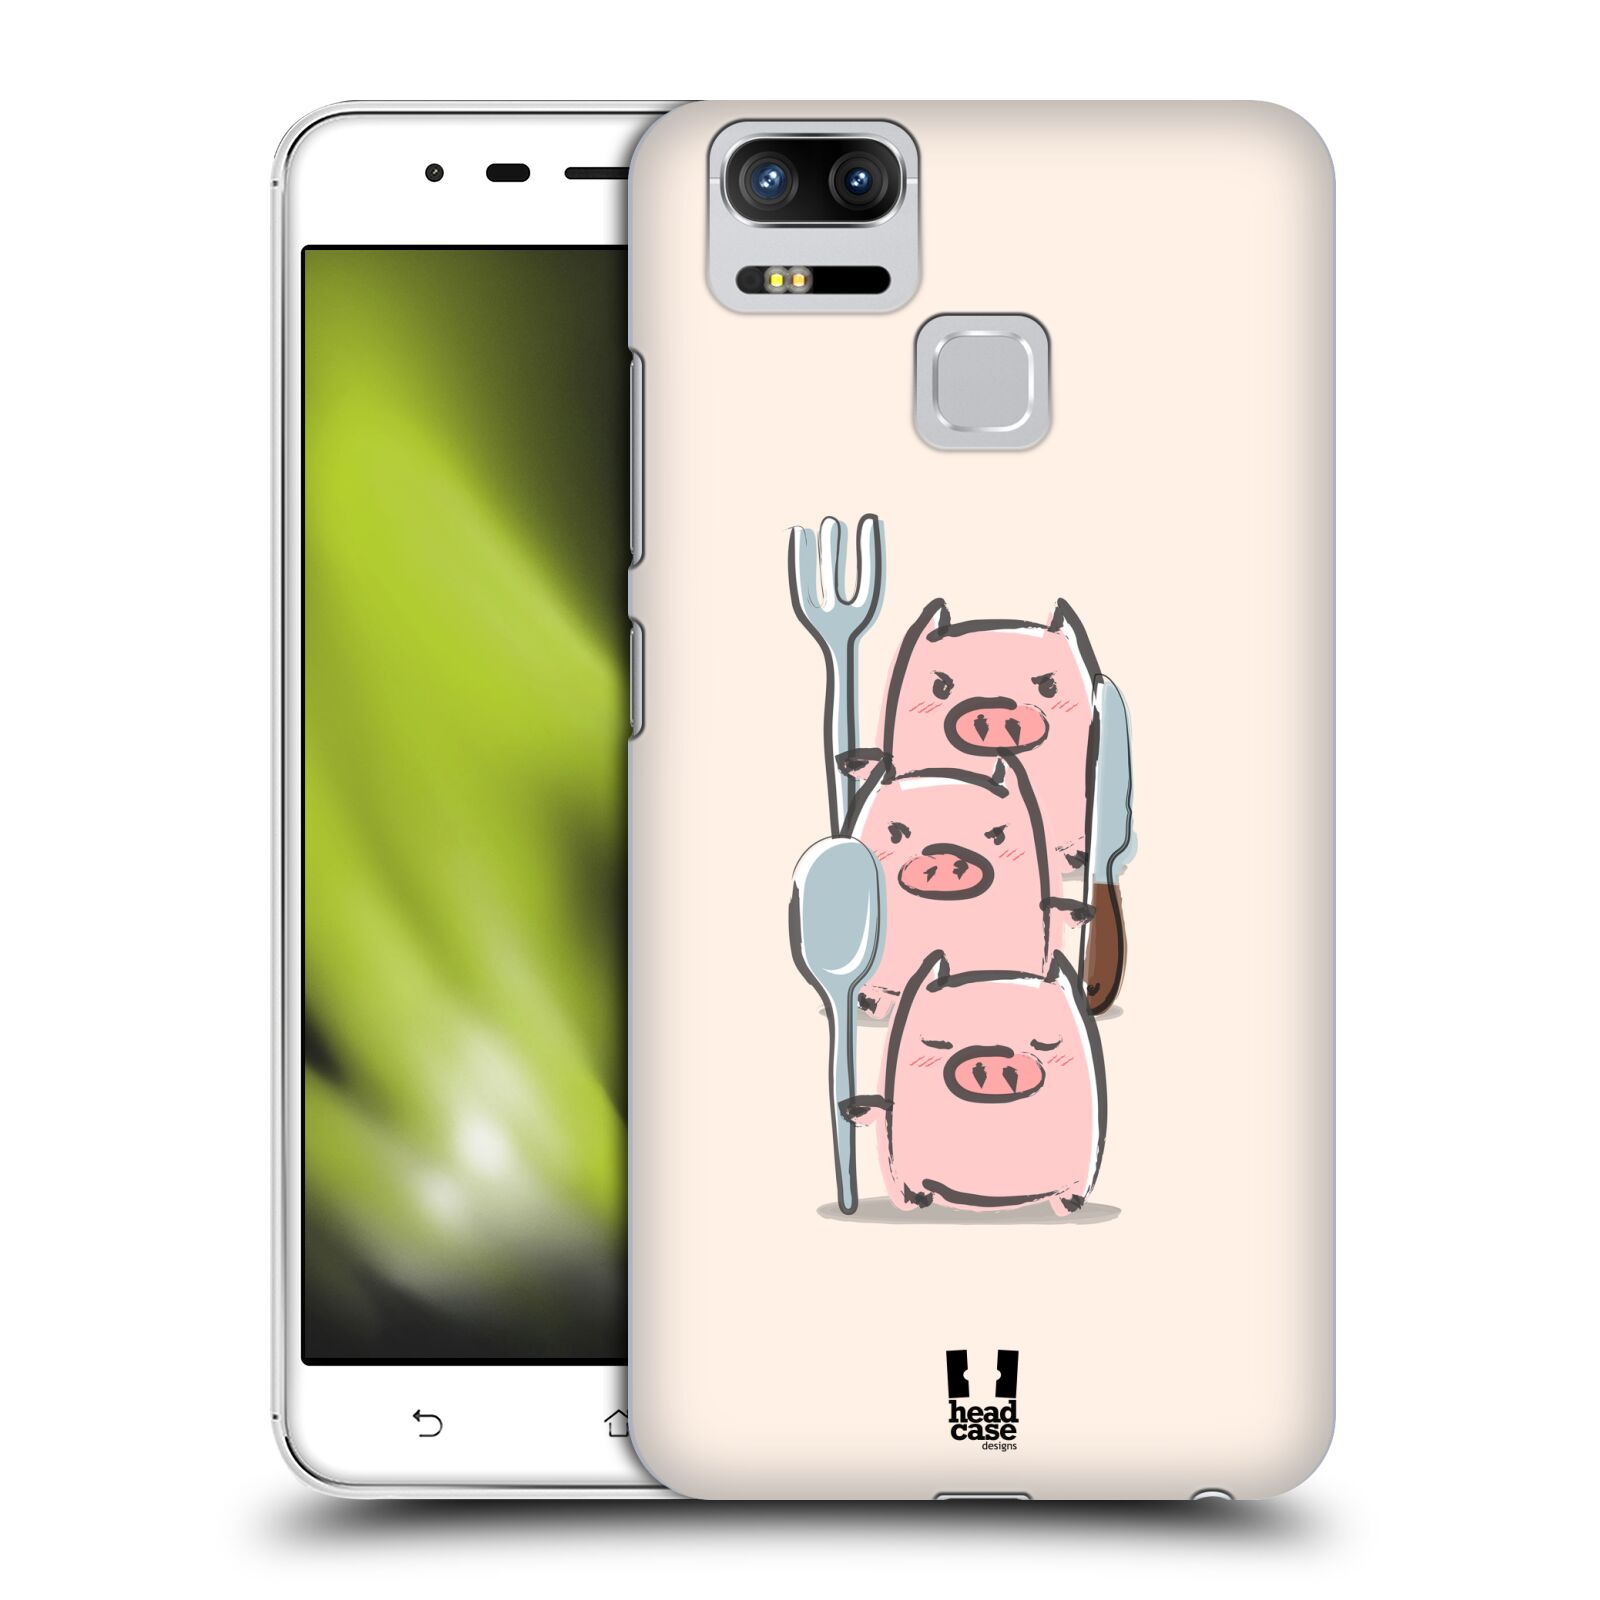 HEAD CASE plastový obal na mobil Asus Zenfone 3 Zoom ZE553KL vzor roztomilé růžové prasátko hladovci